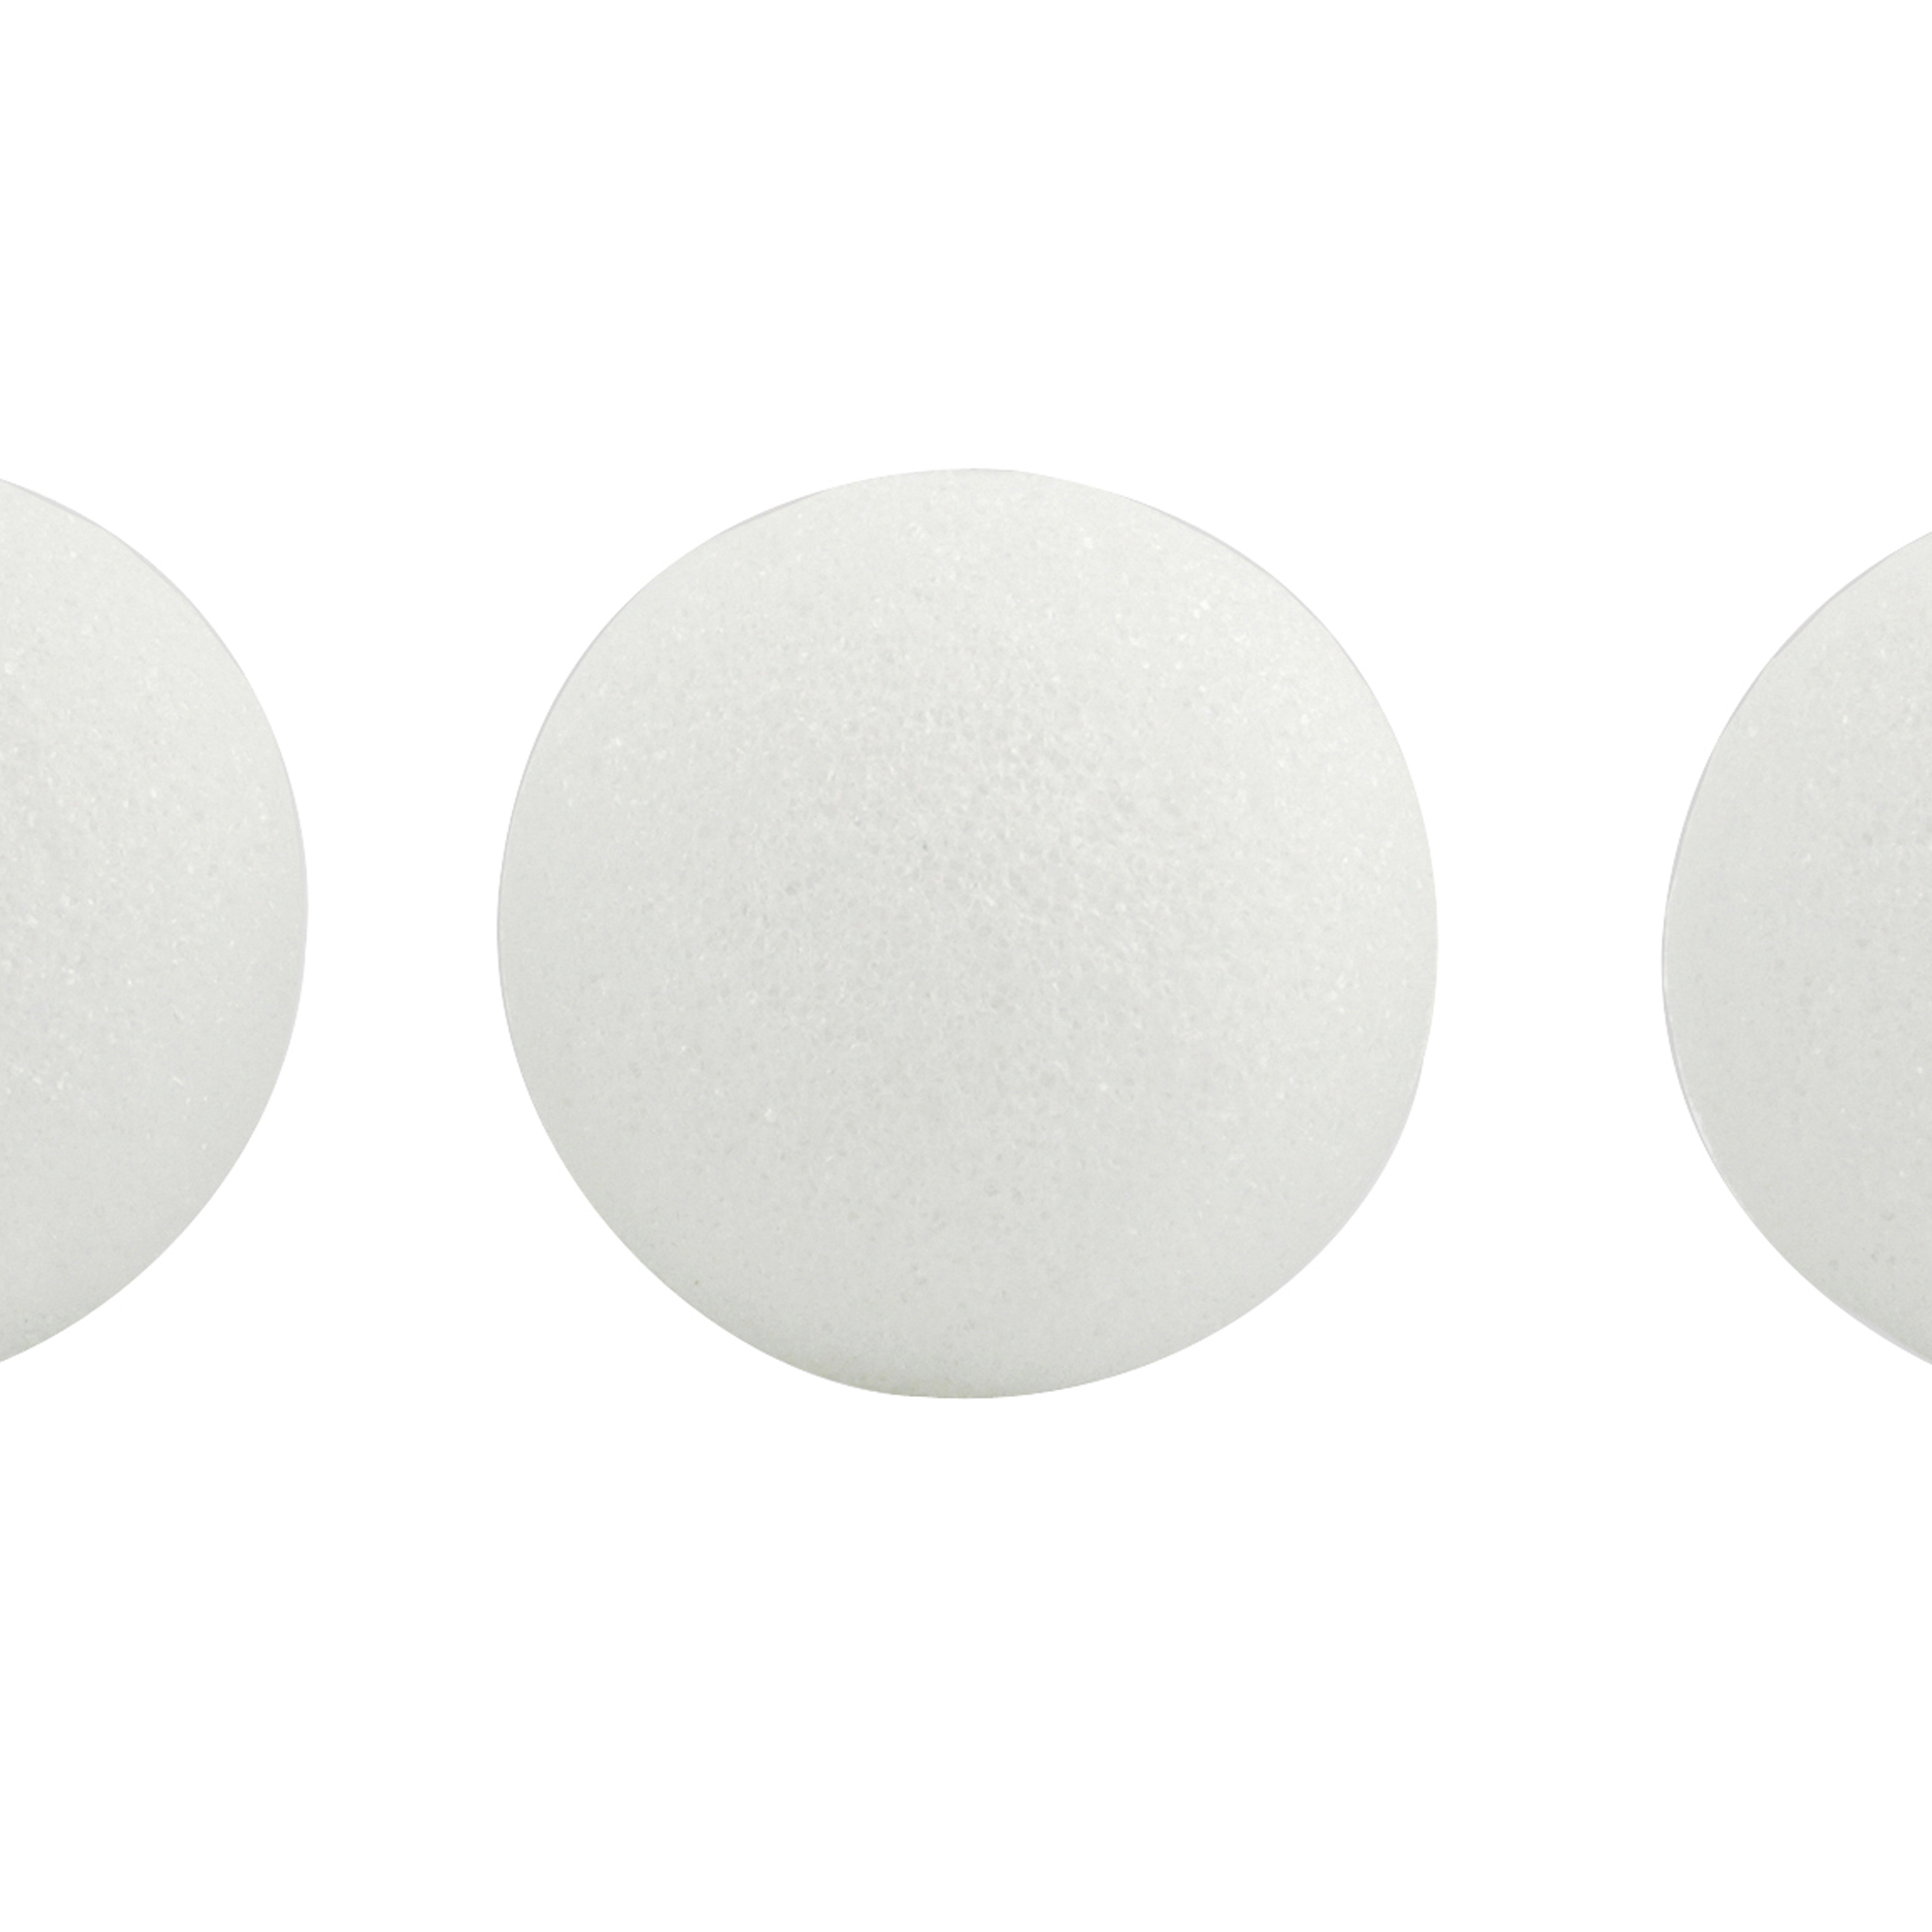 Styrofoam Balls 2 Inch, 12 Pack